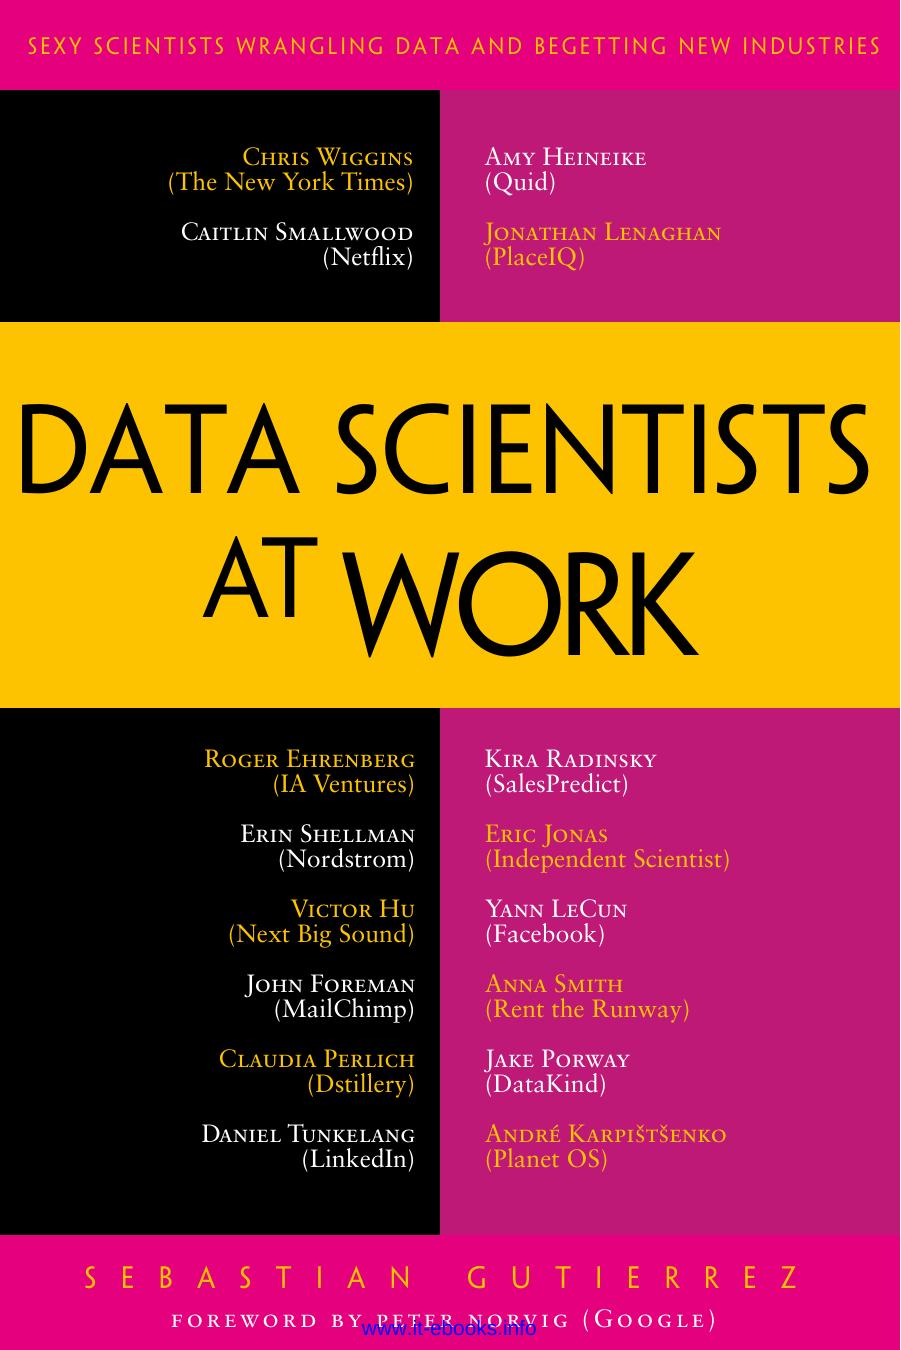 Data Scientists at Work by Sebastian Gutierrez